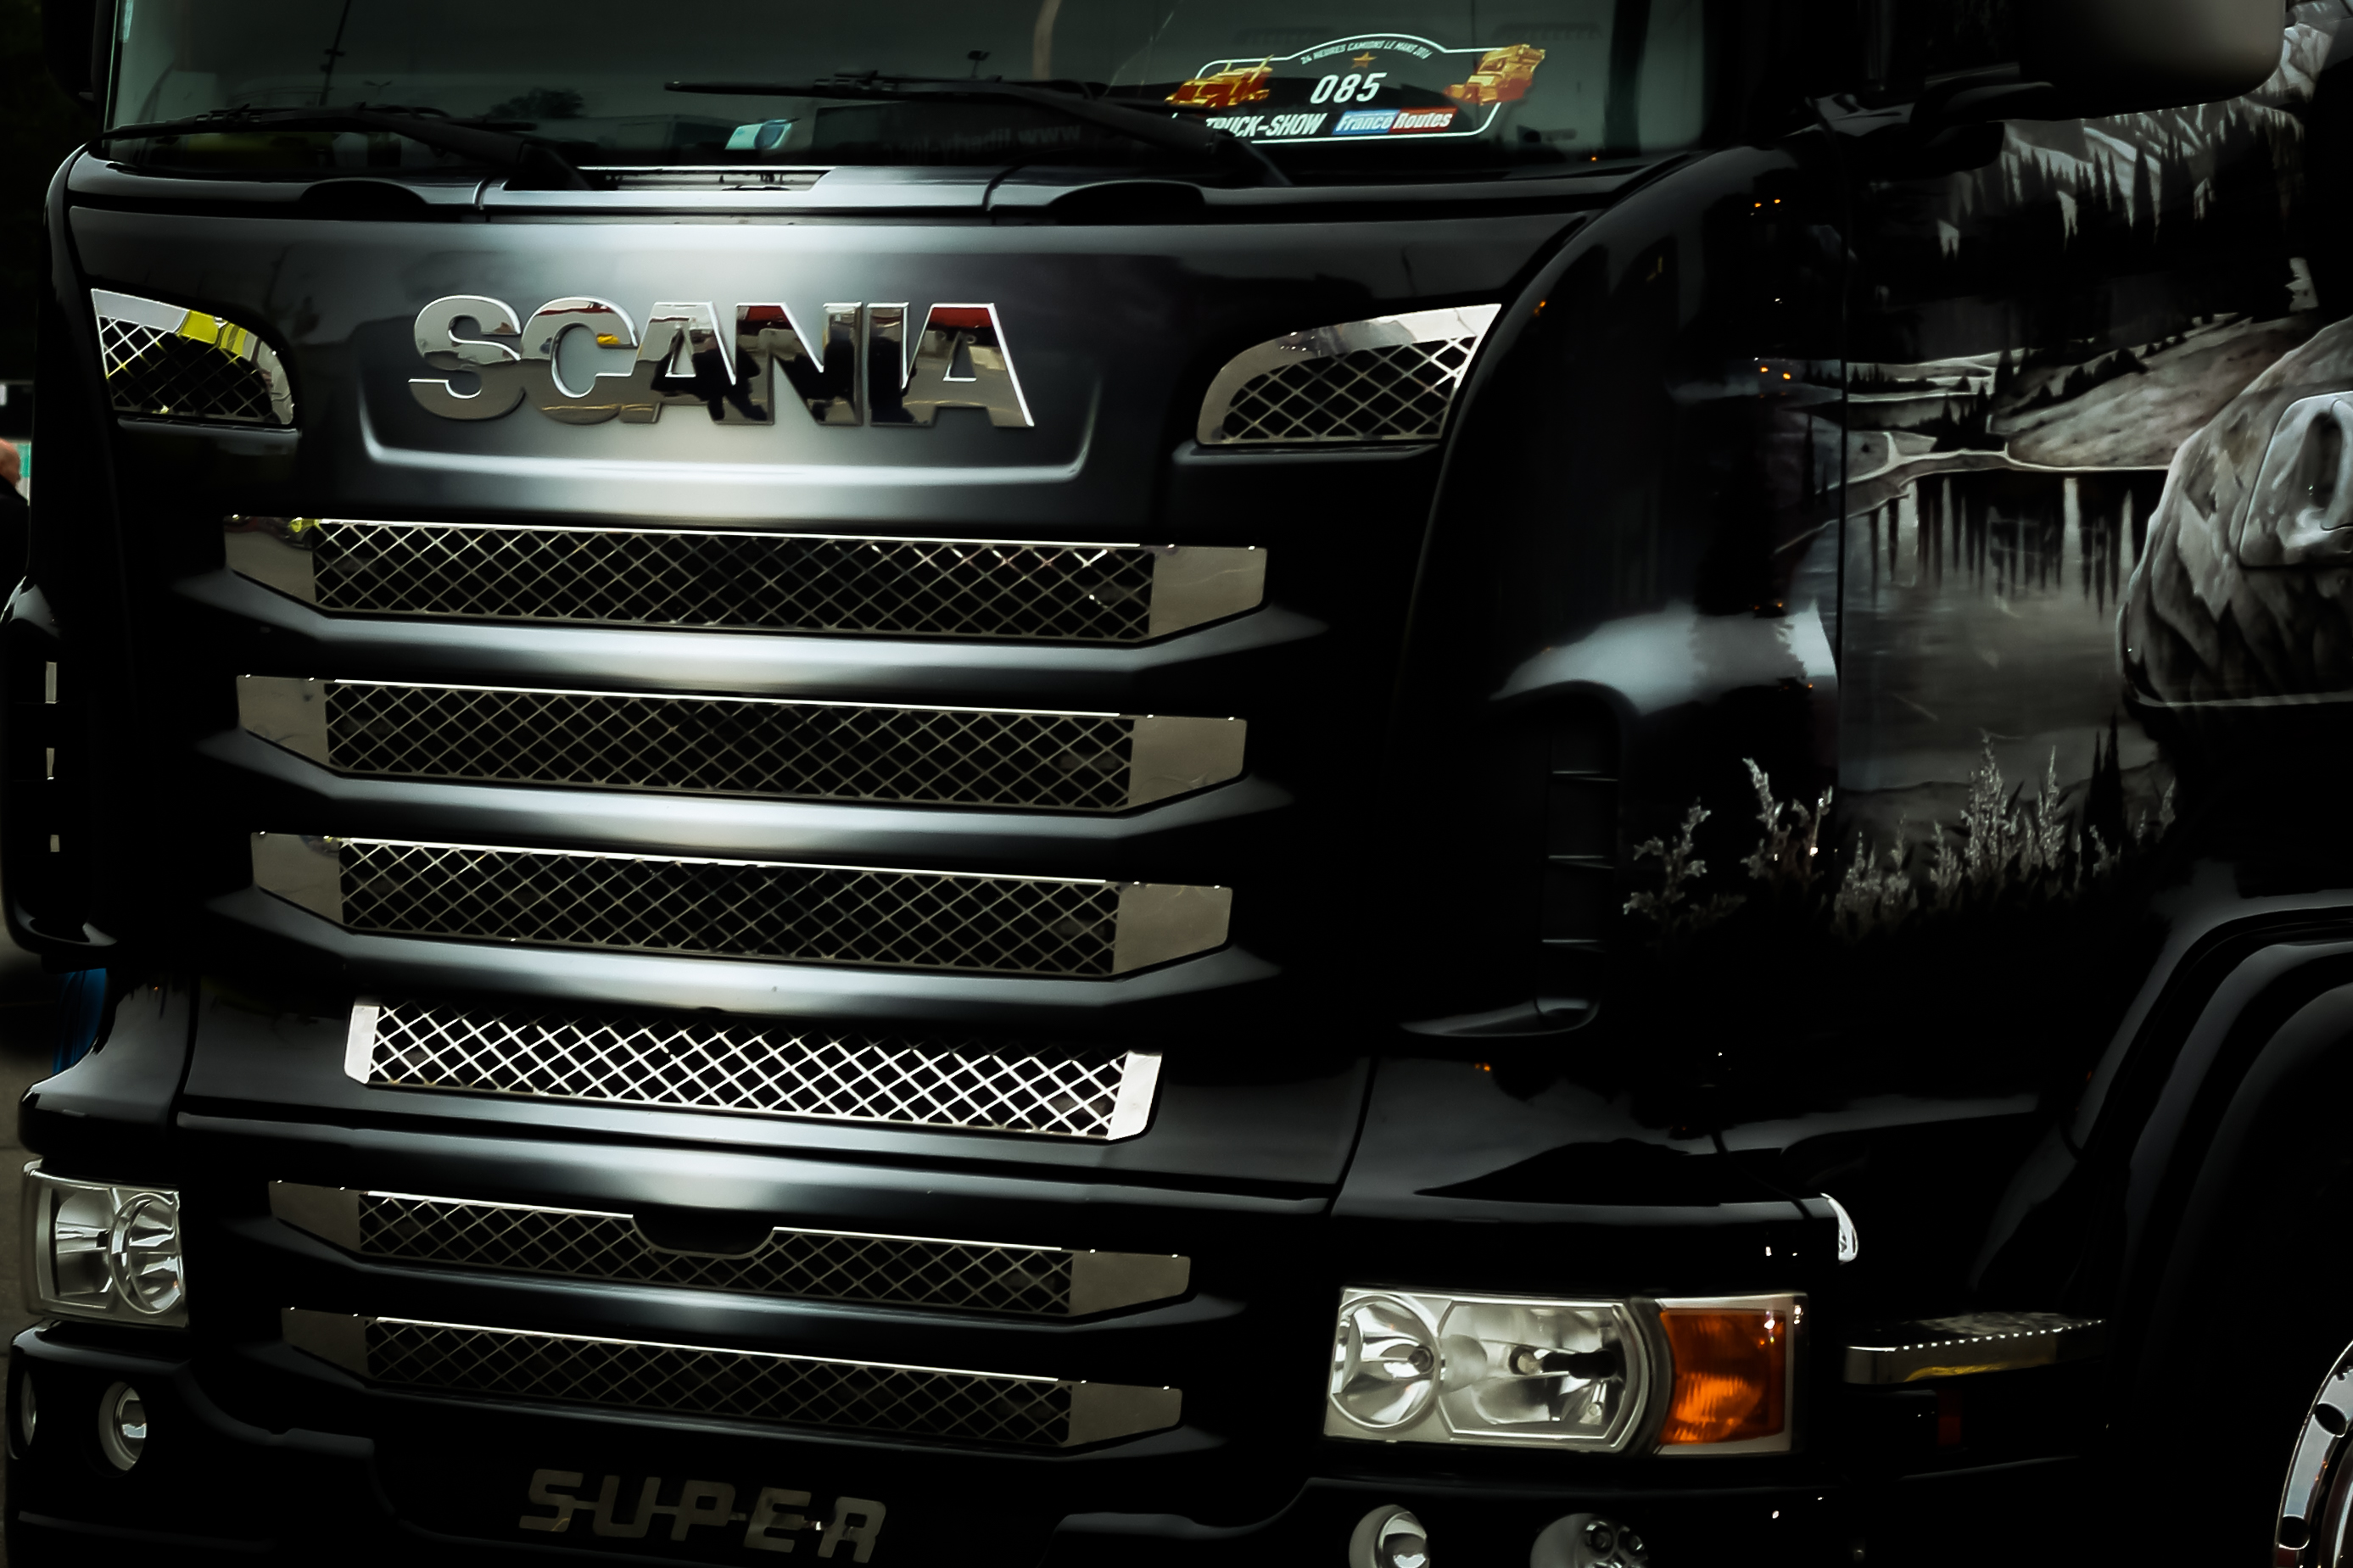 Scania Truck Wallpaper Hd - HD Wallpaper 